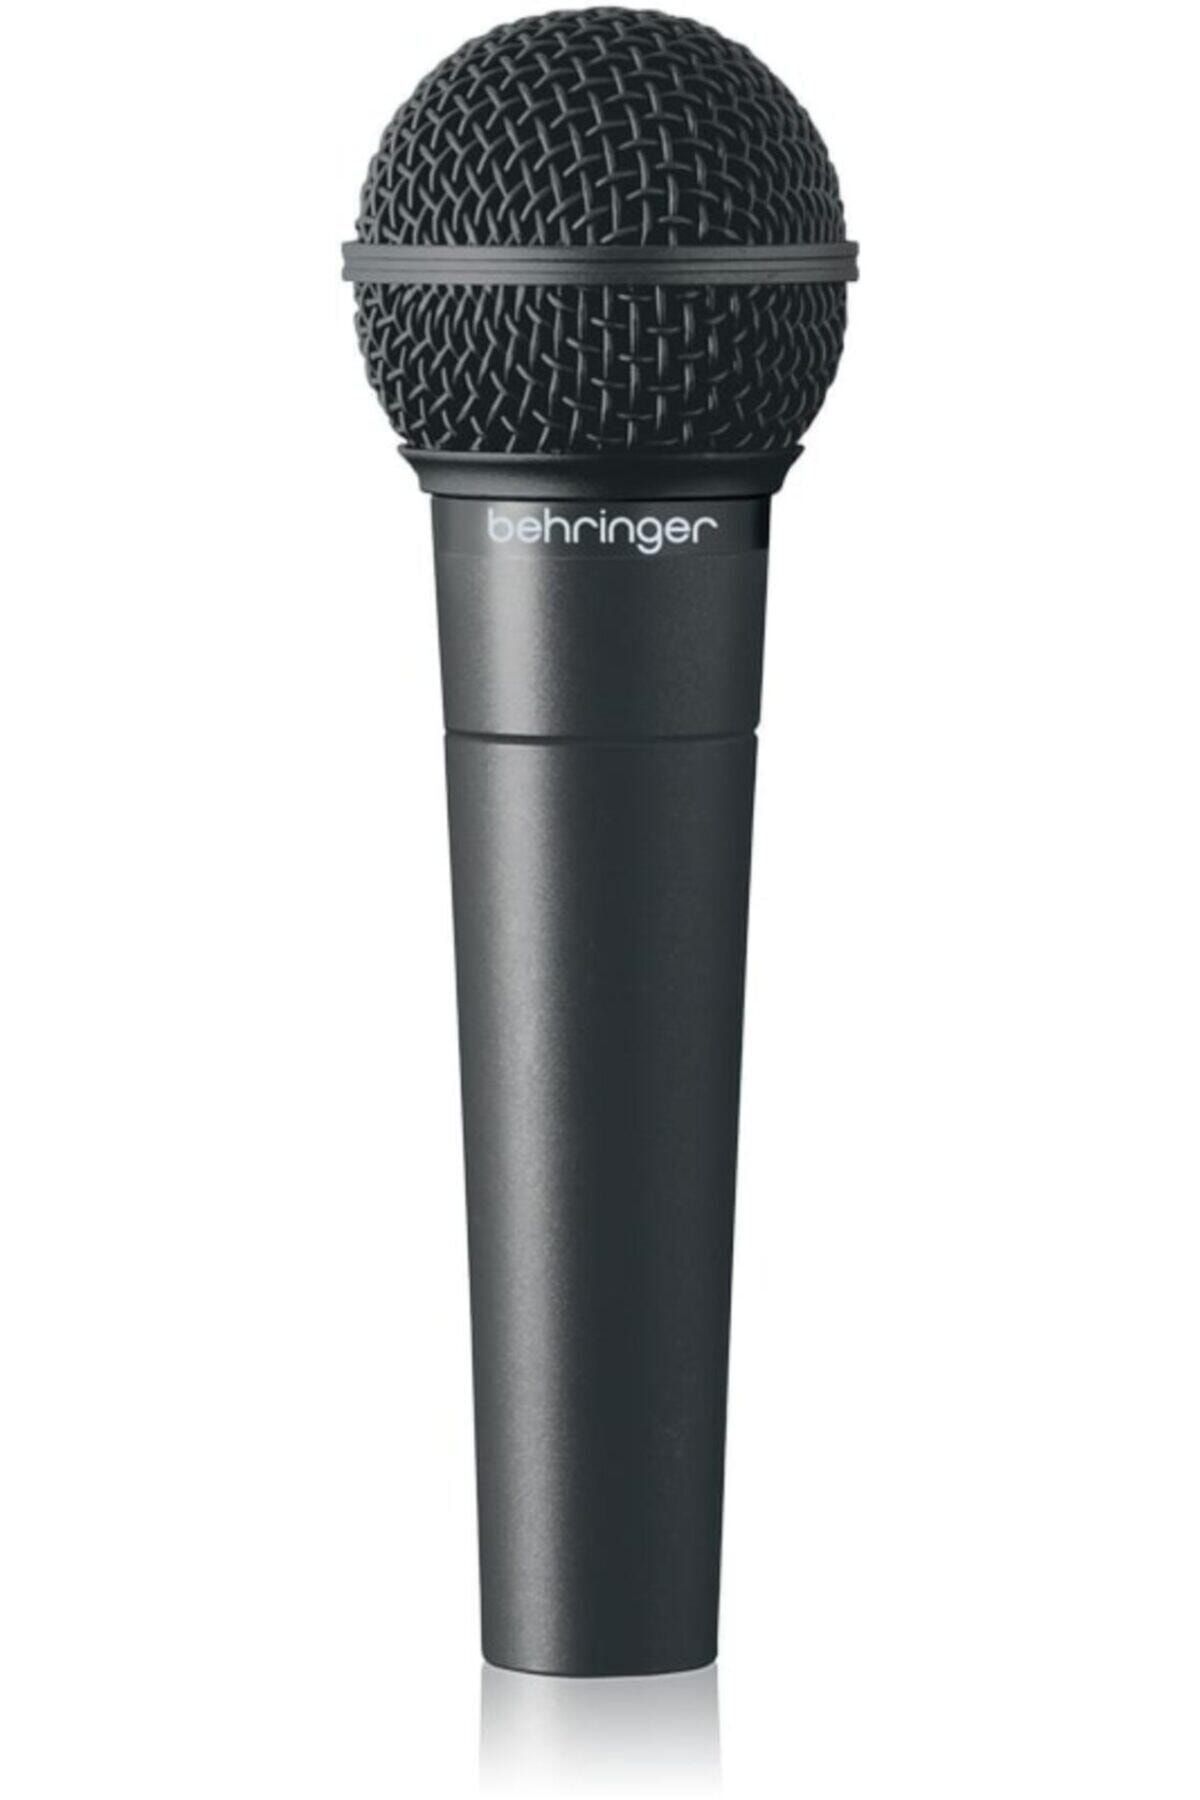 Behringer Behrınger Xm8500 Dynamic Vocal Microphone Cardioid